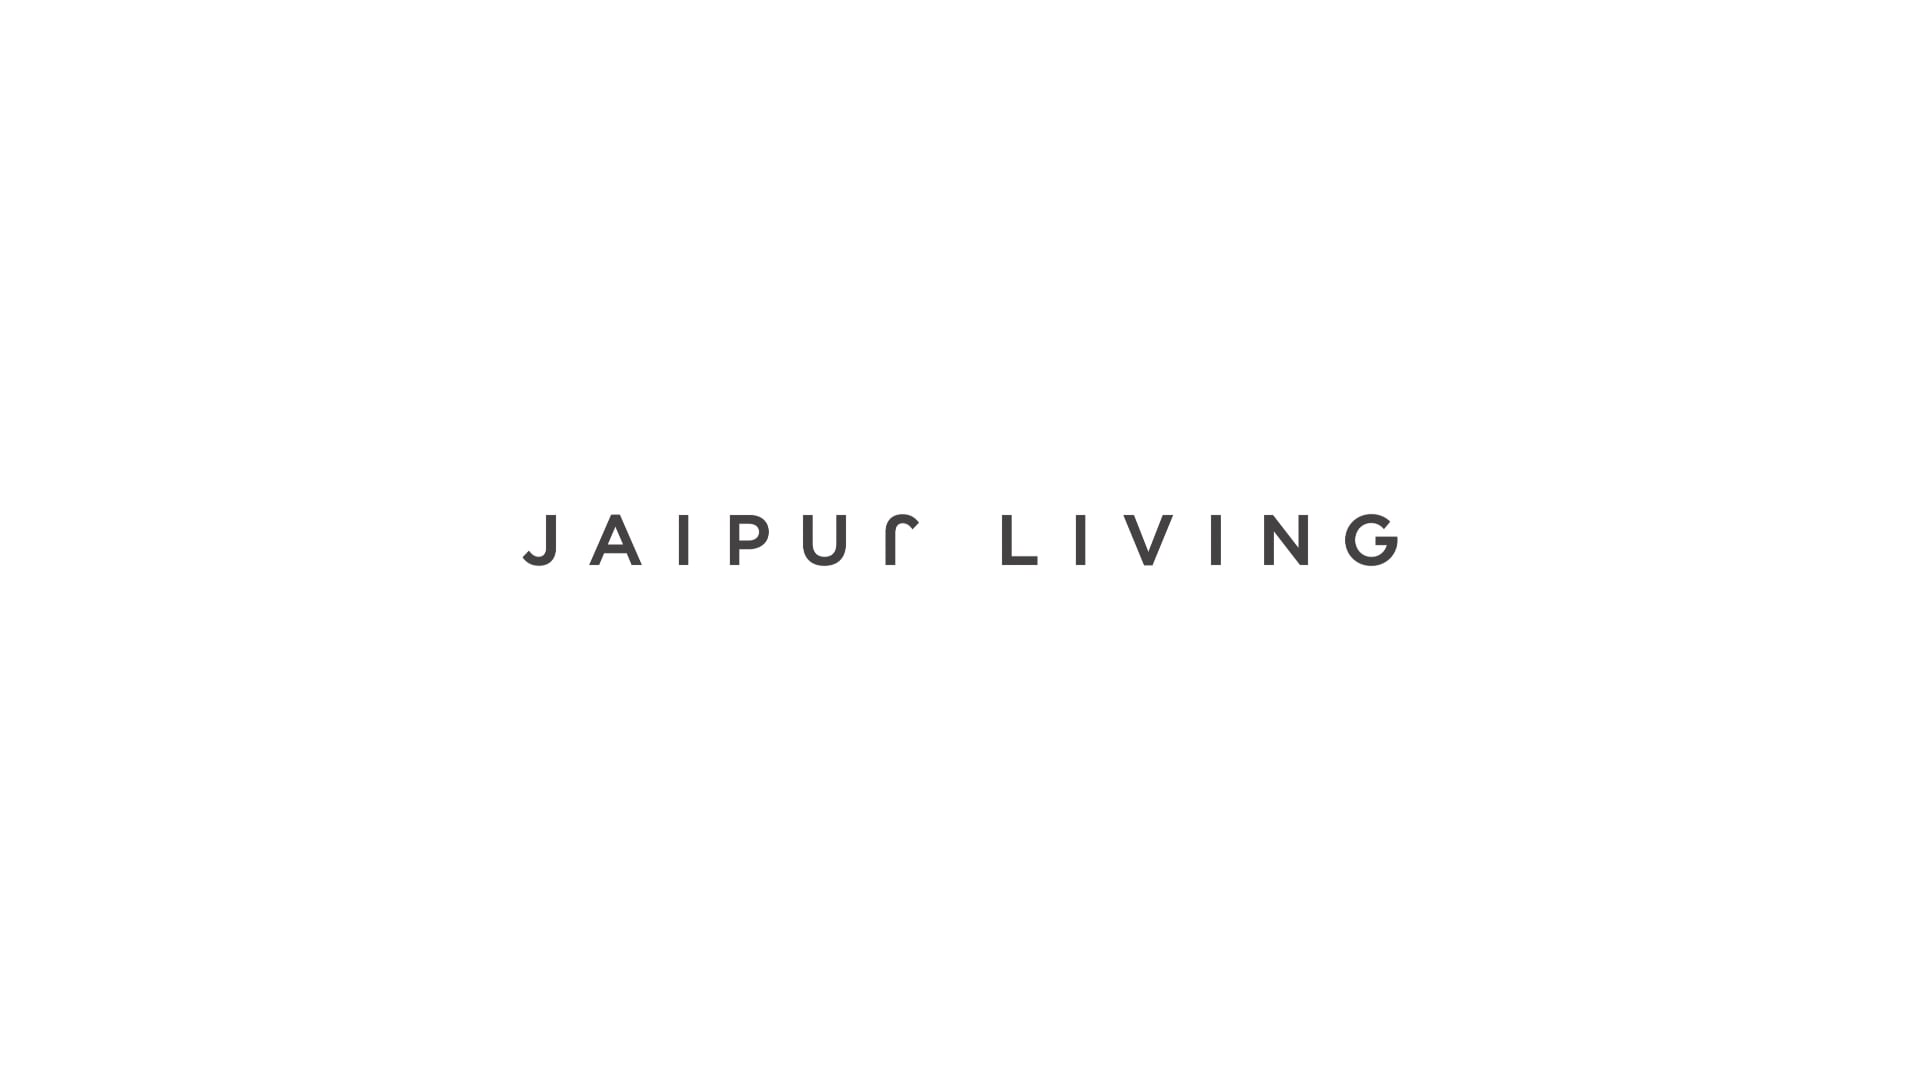 Jaipur Living Malo Medallion Pink/White Area Rug, 5'x7'6"